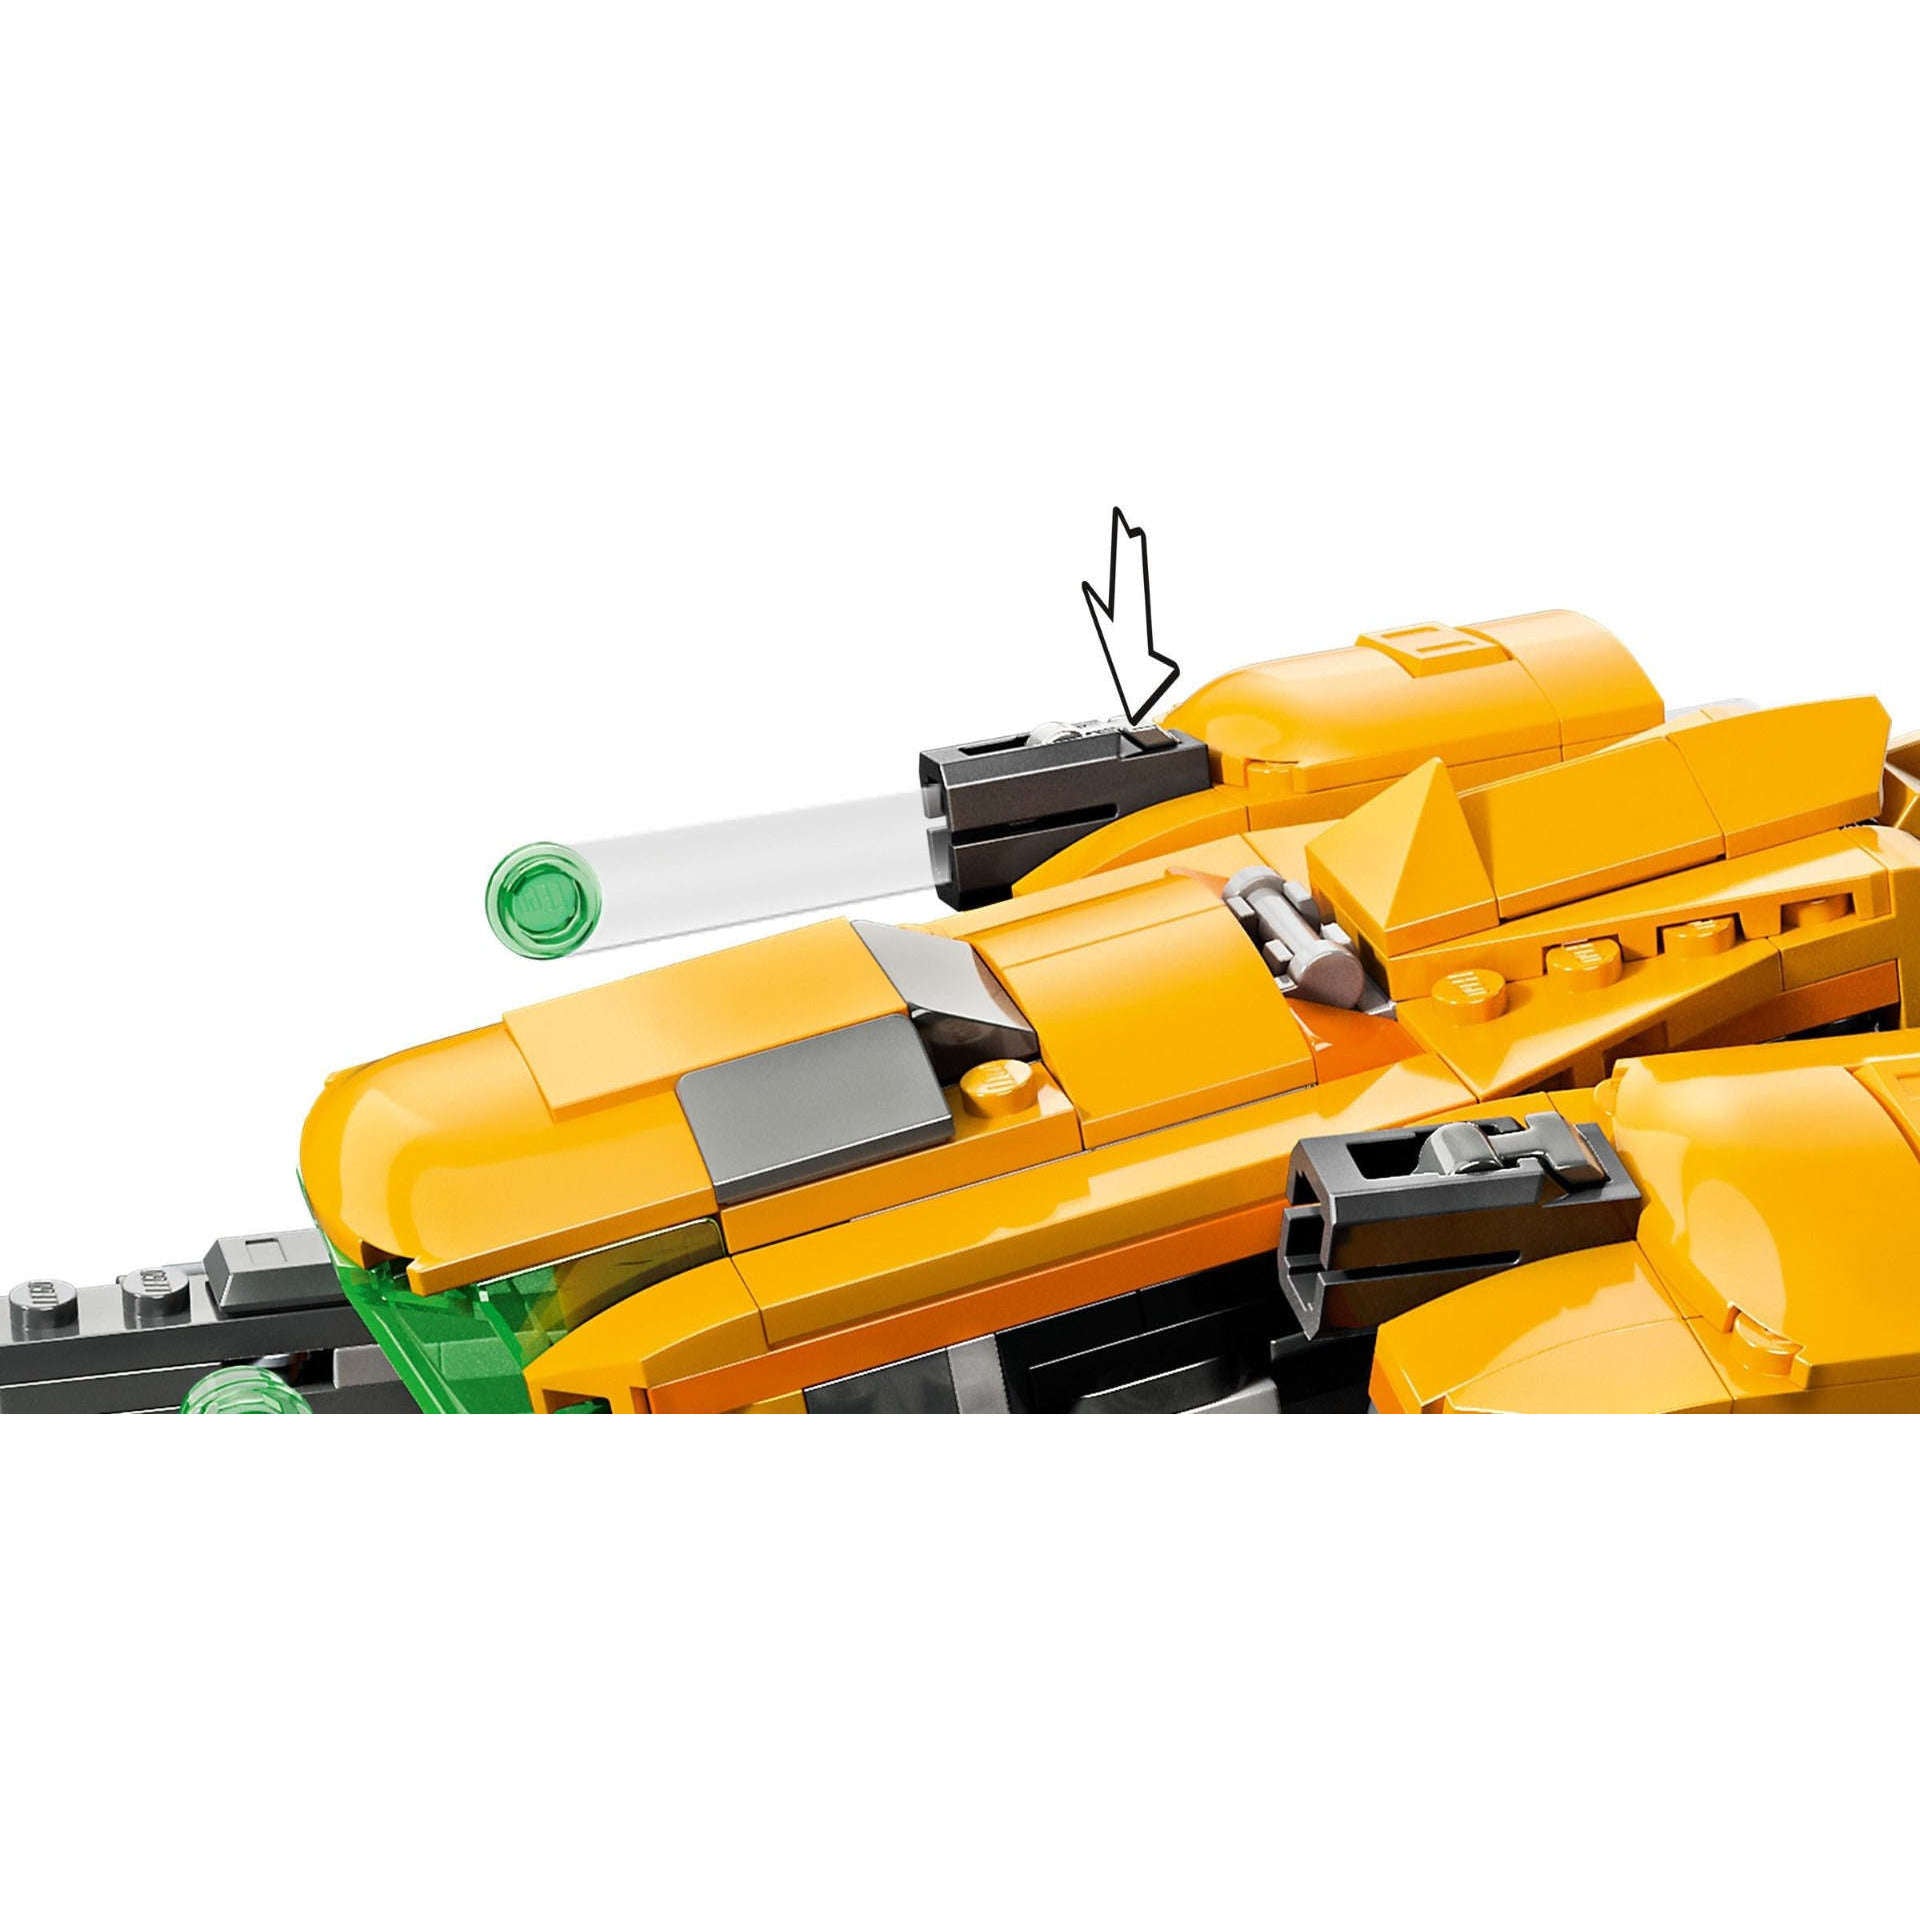 Toys N Tuck:Lego 76254 Marvel Baby Rocket's Ship,Lego Marvel